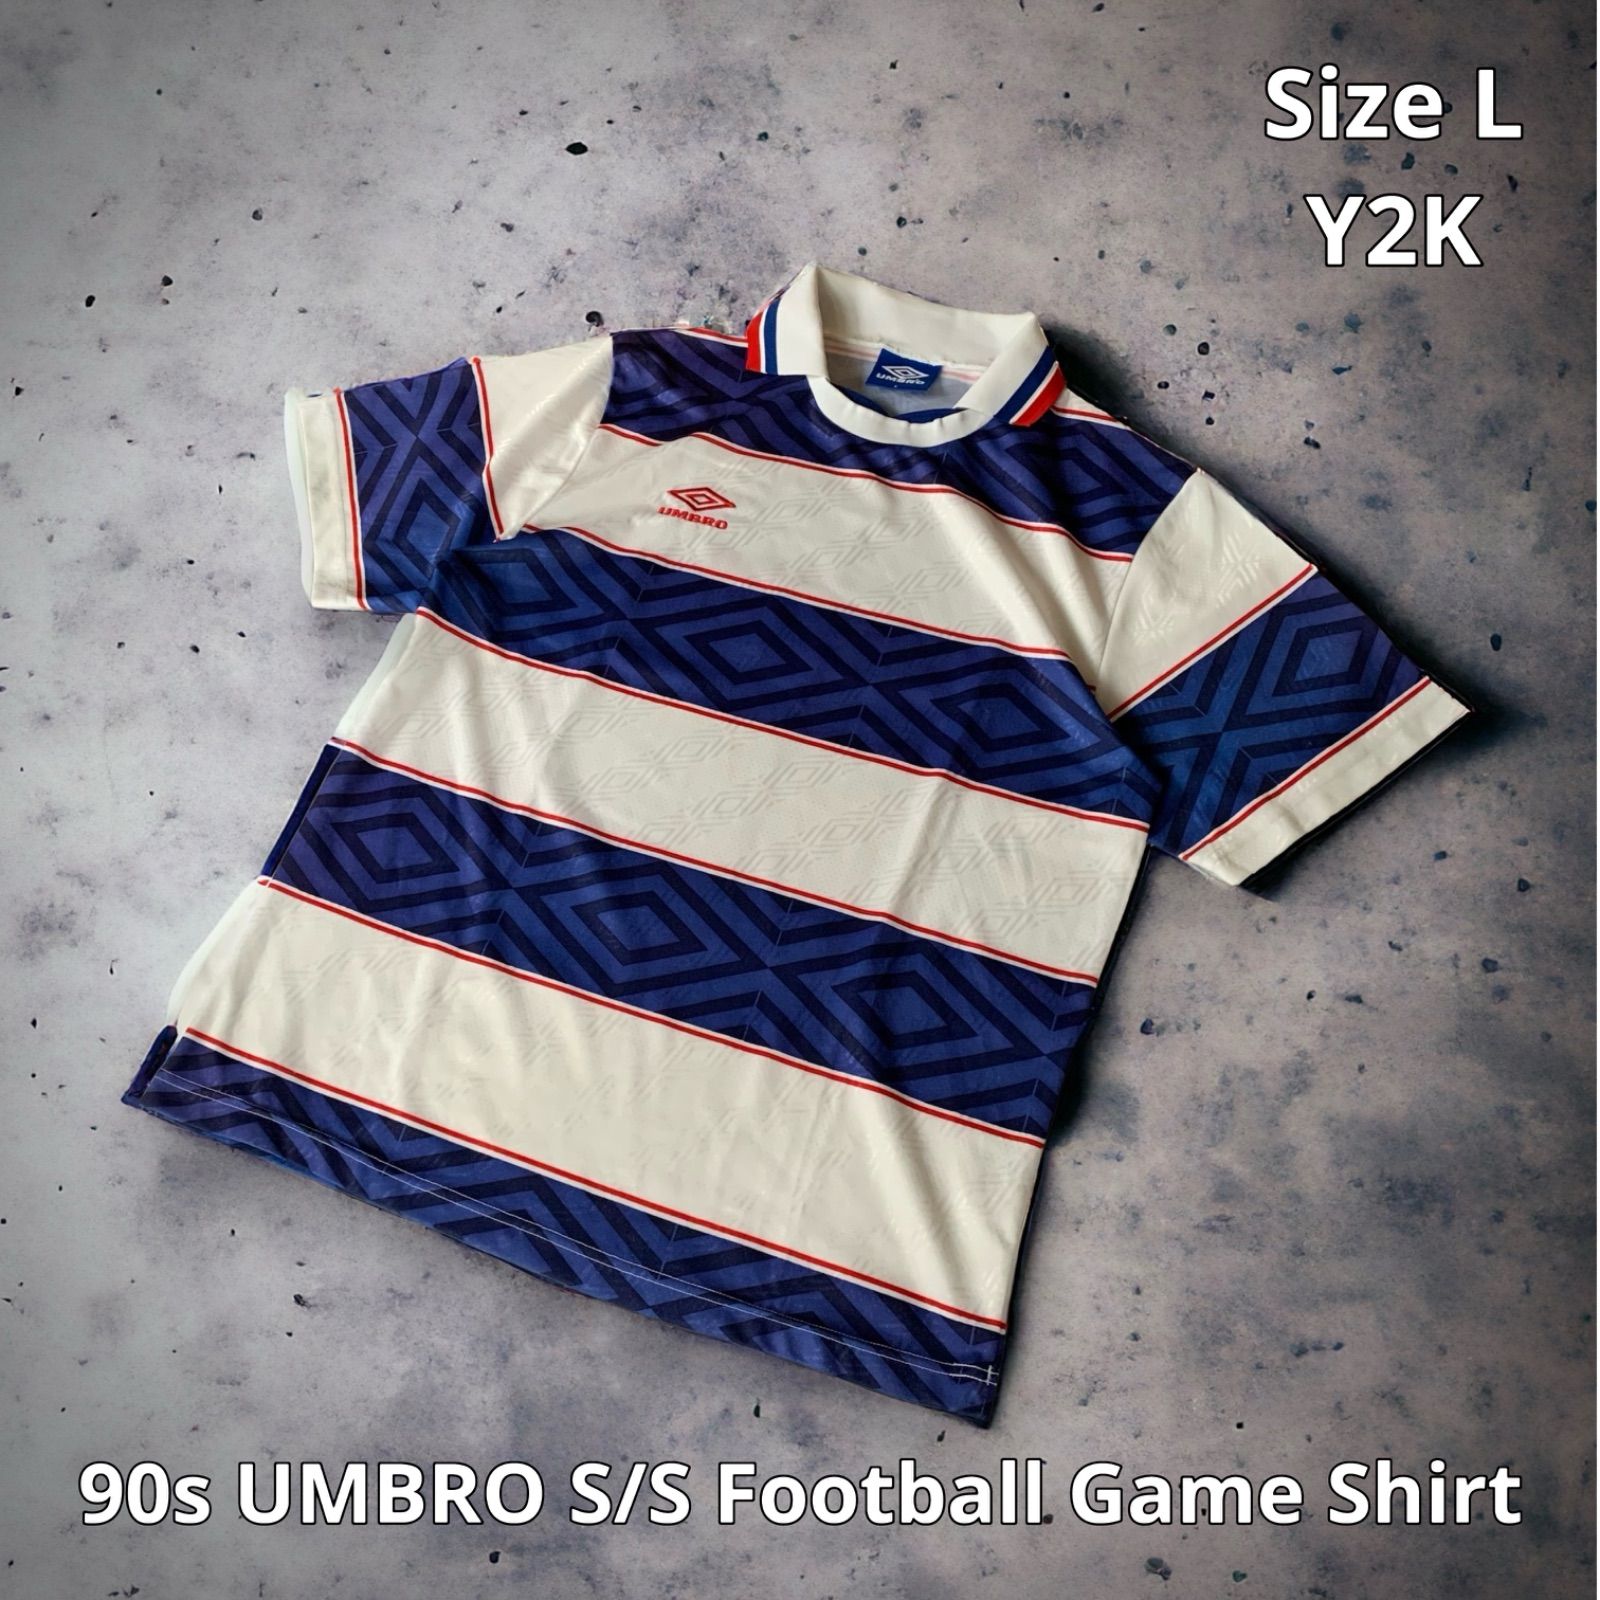 90s UMBRO S/S Football Game Shirt アンブロフットボールシャツ 